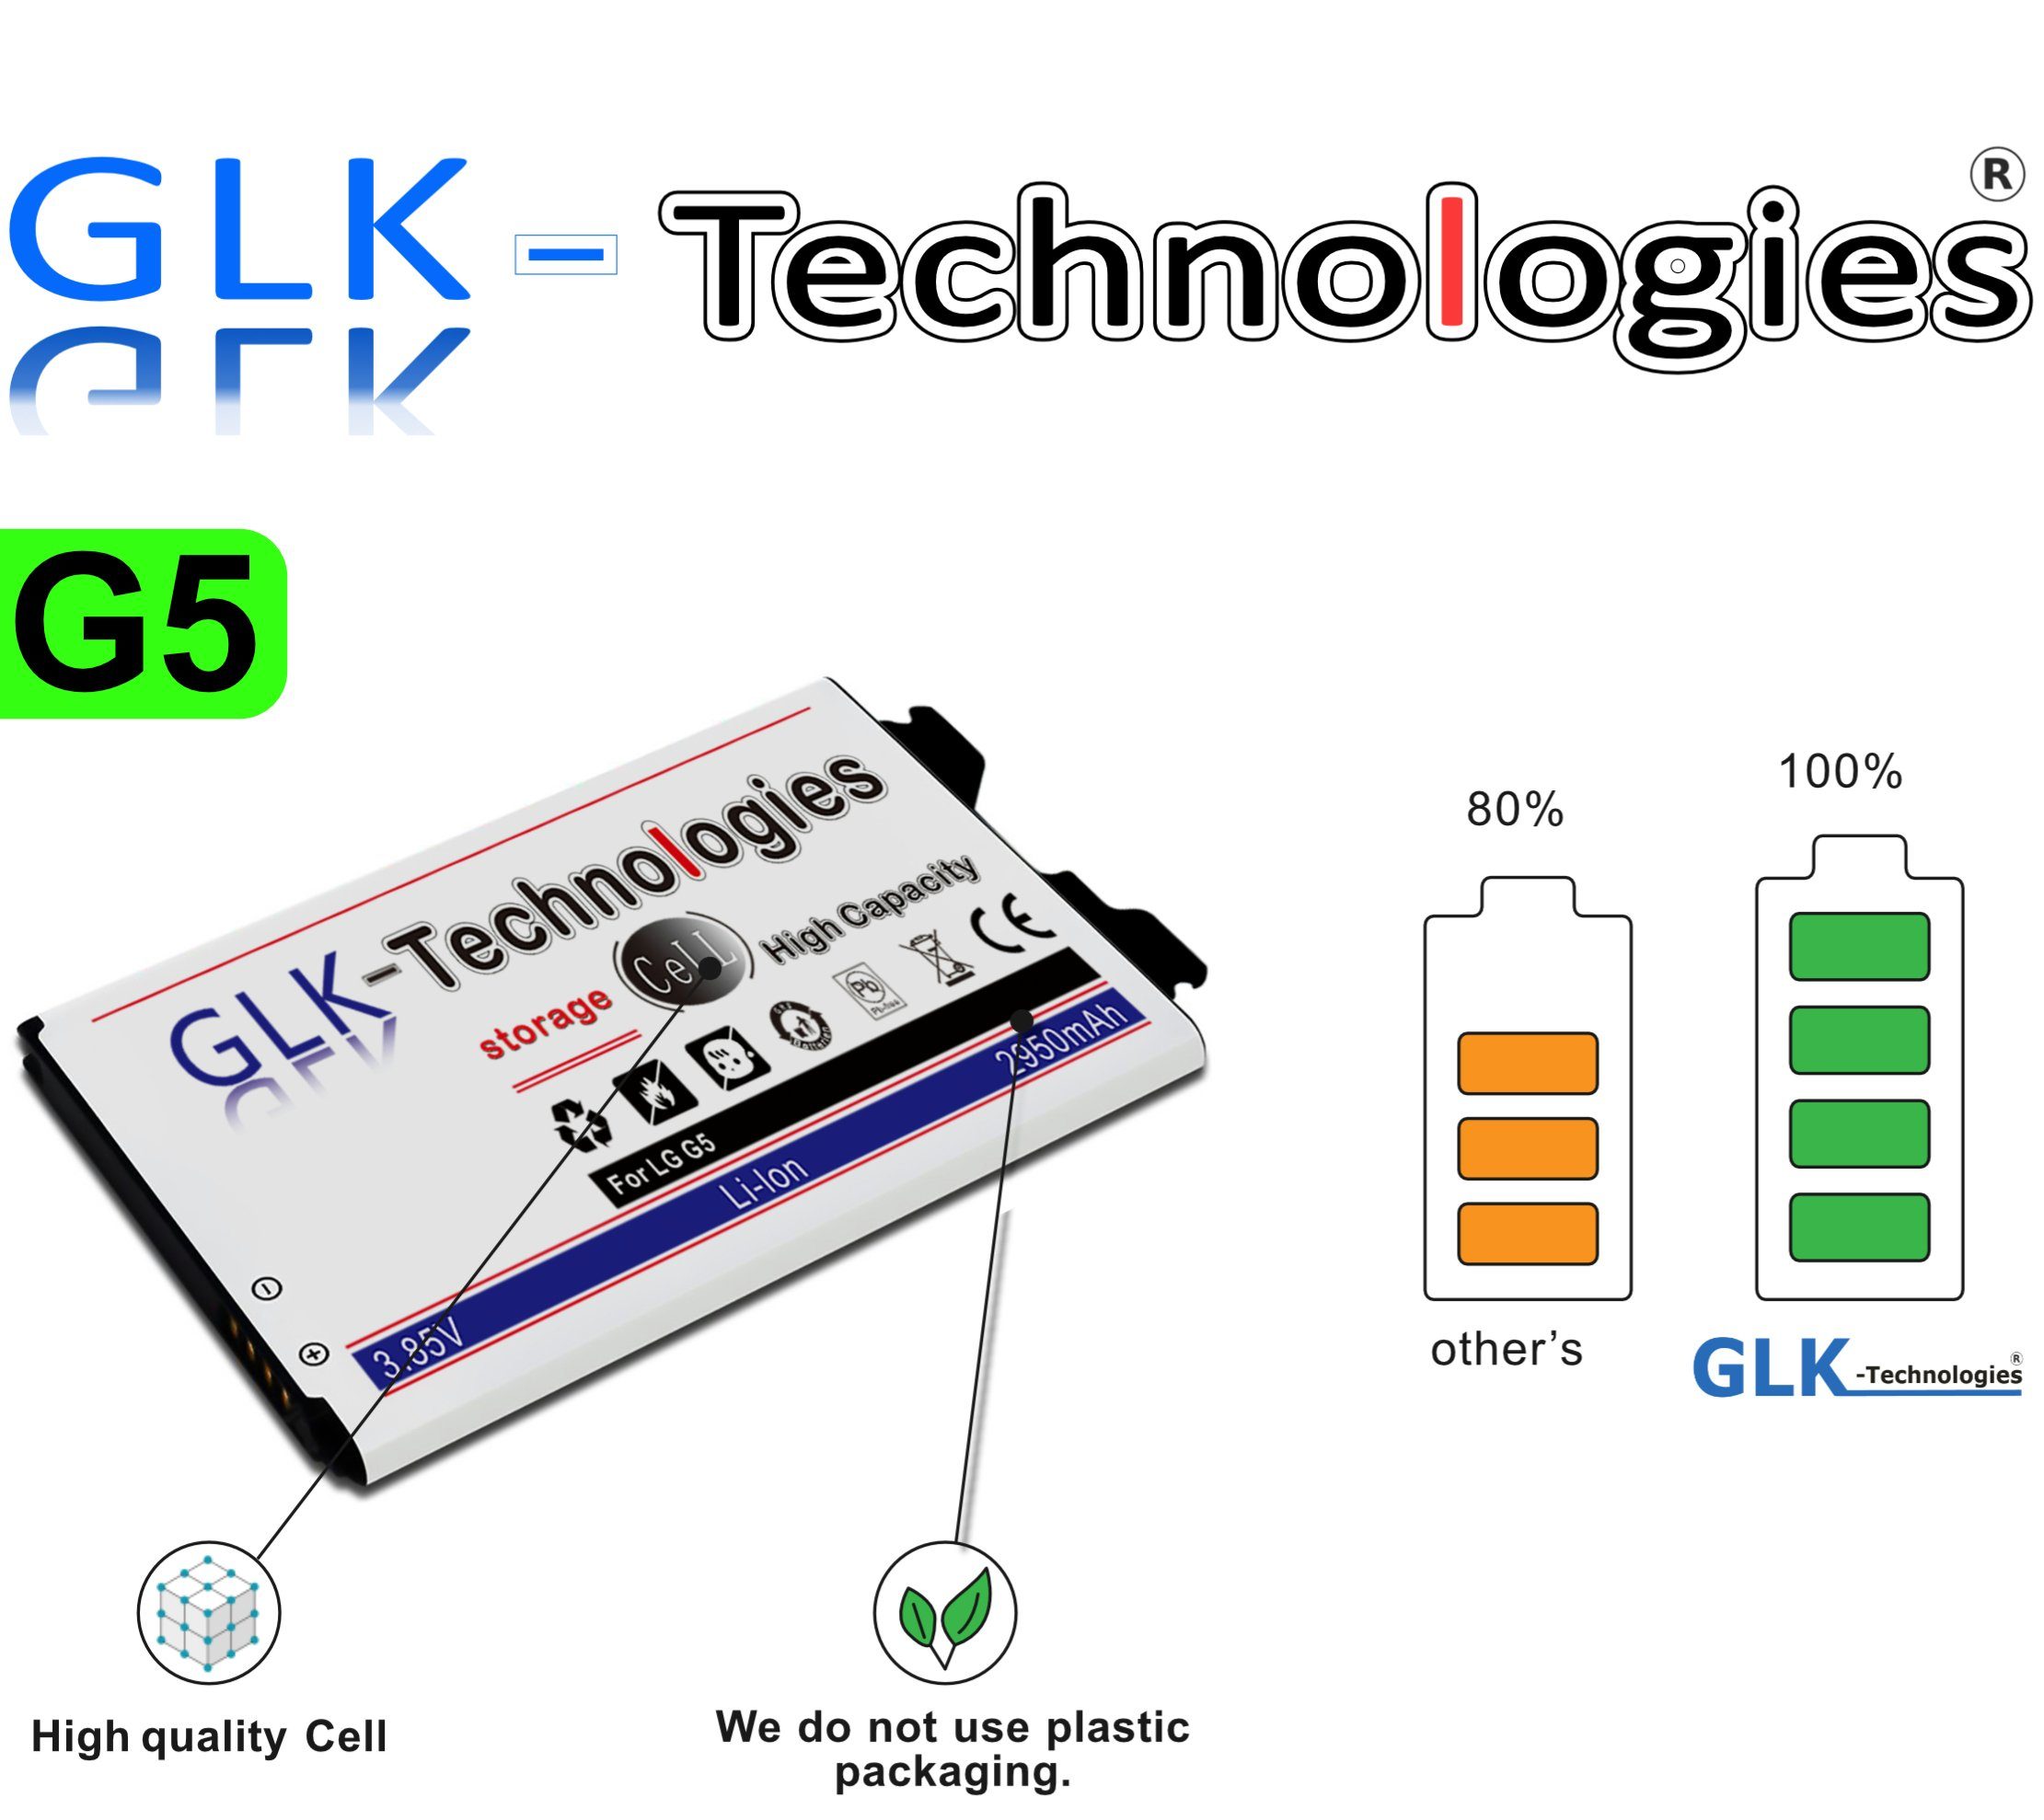 BL-42D1F, NEU (3.8 2950mAh Battery, GLK-Technologies V) LG für High G5 mAh / Ersatzakku Smartphone-Akku accu, Original GLK-Technologies Dual Akku, H860N H850 SIM LTE 2950 Power